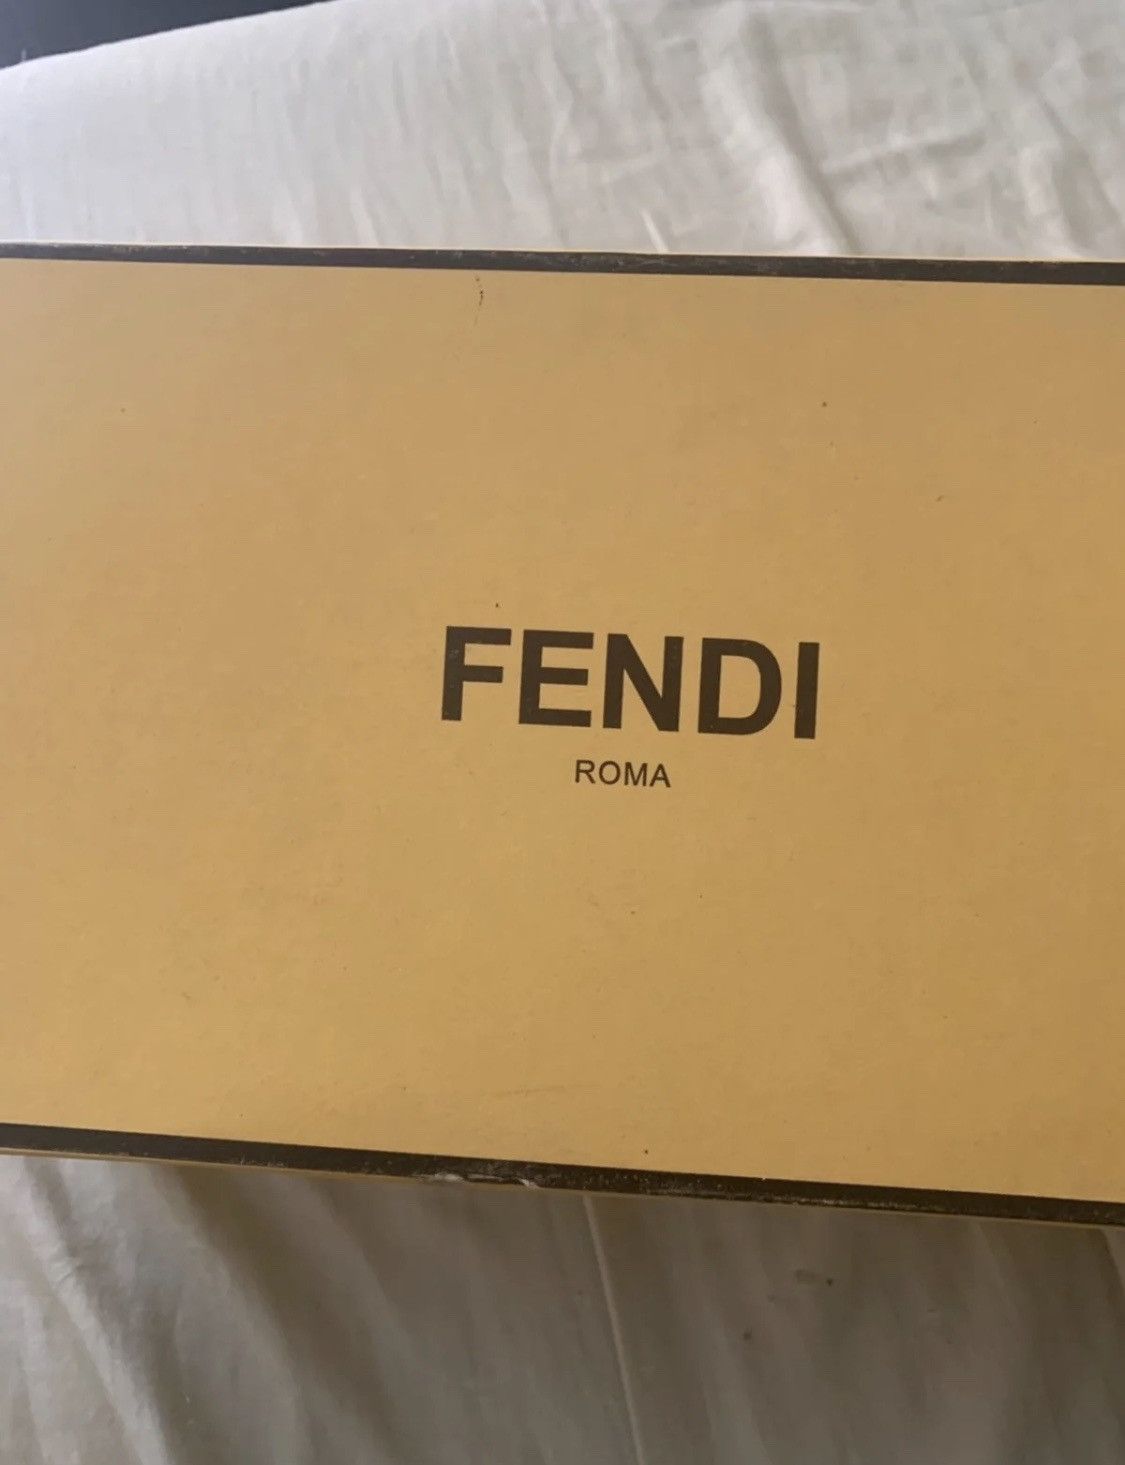 Fendi Fendi Shoes Size US 10 / EU 43 - 7 Thumbnail